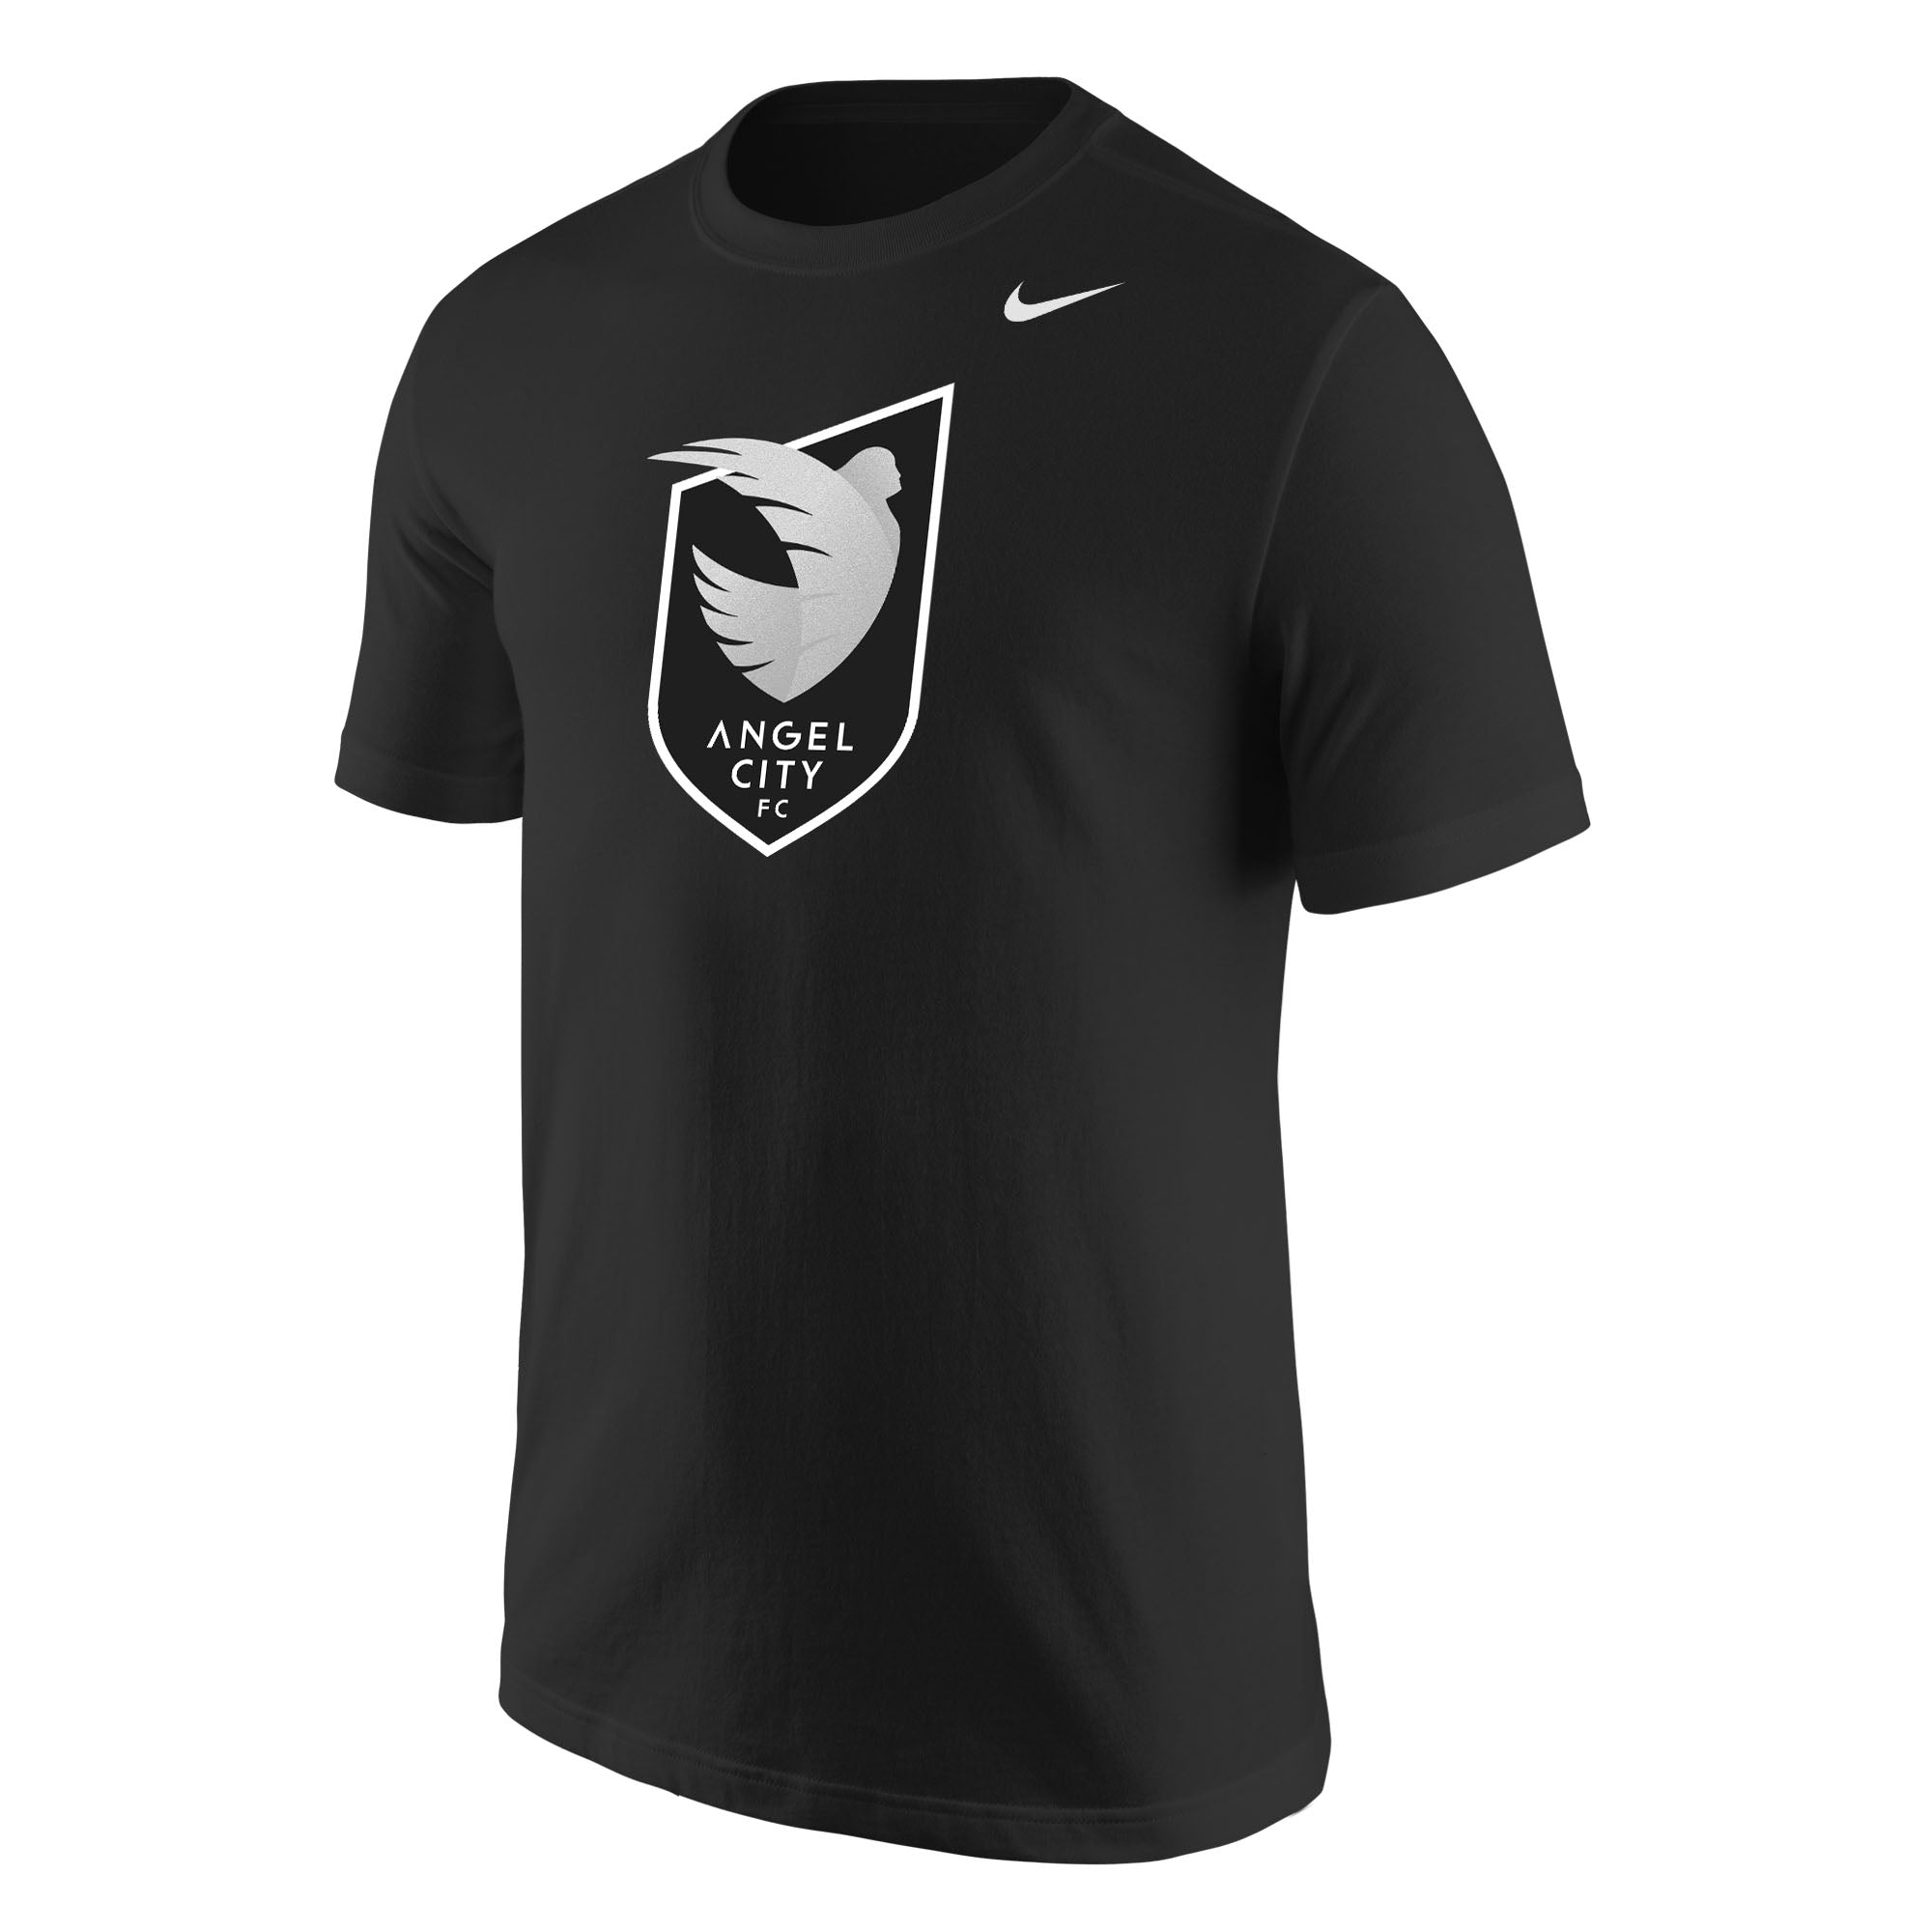 Angel City FC Nike Unisex Armor Crest camiseta de manga corta negra